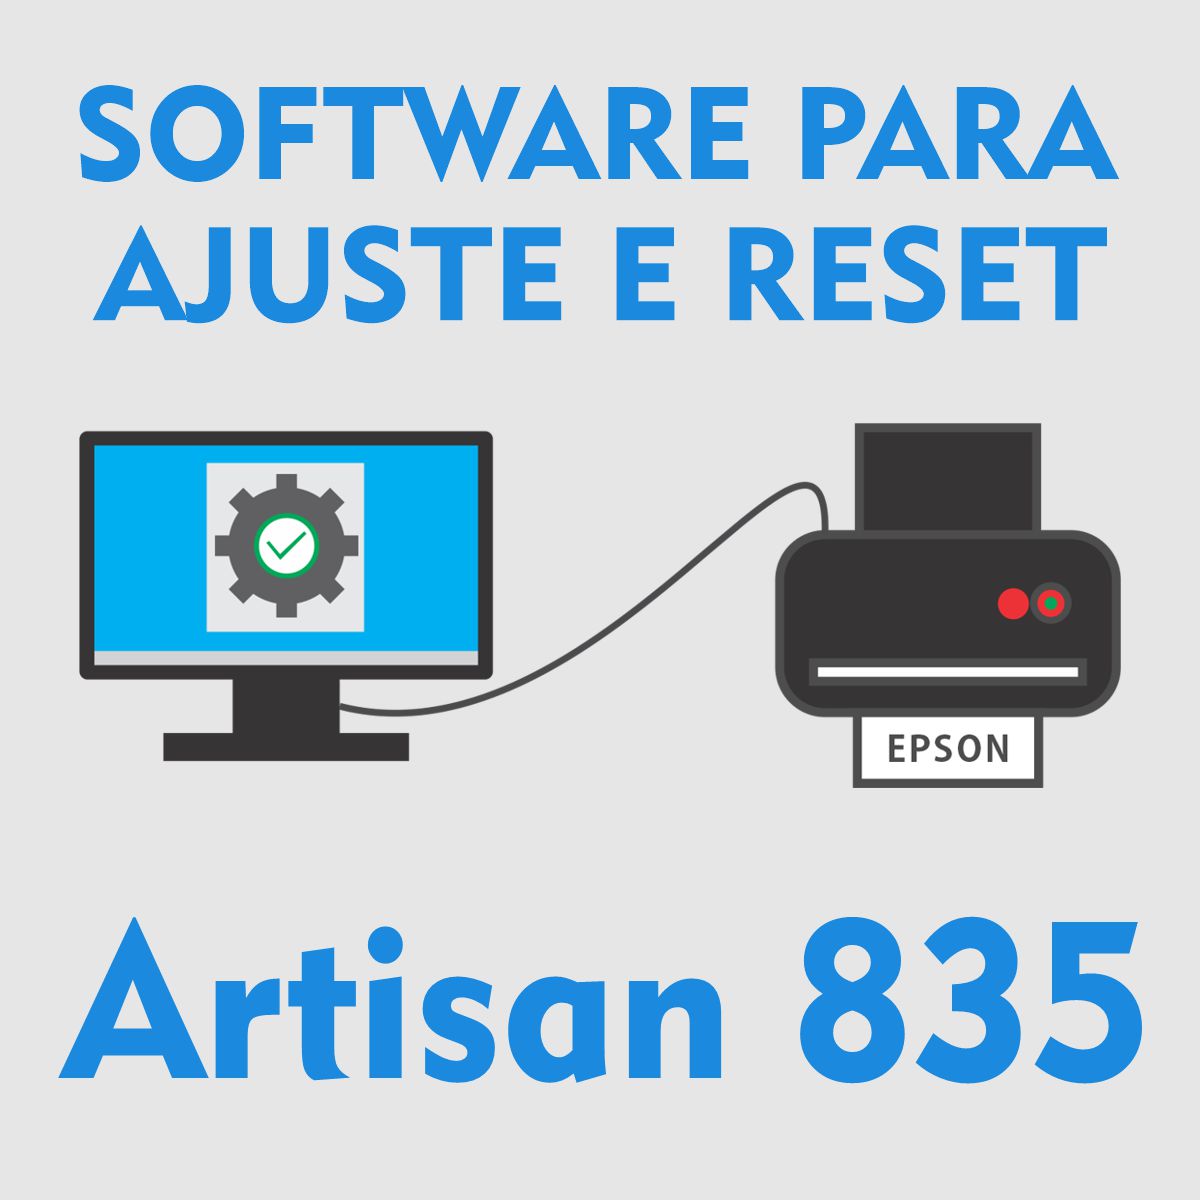 Epson Artisan 835 | Software para Ajustes e Reset das Almofadas